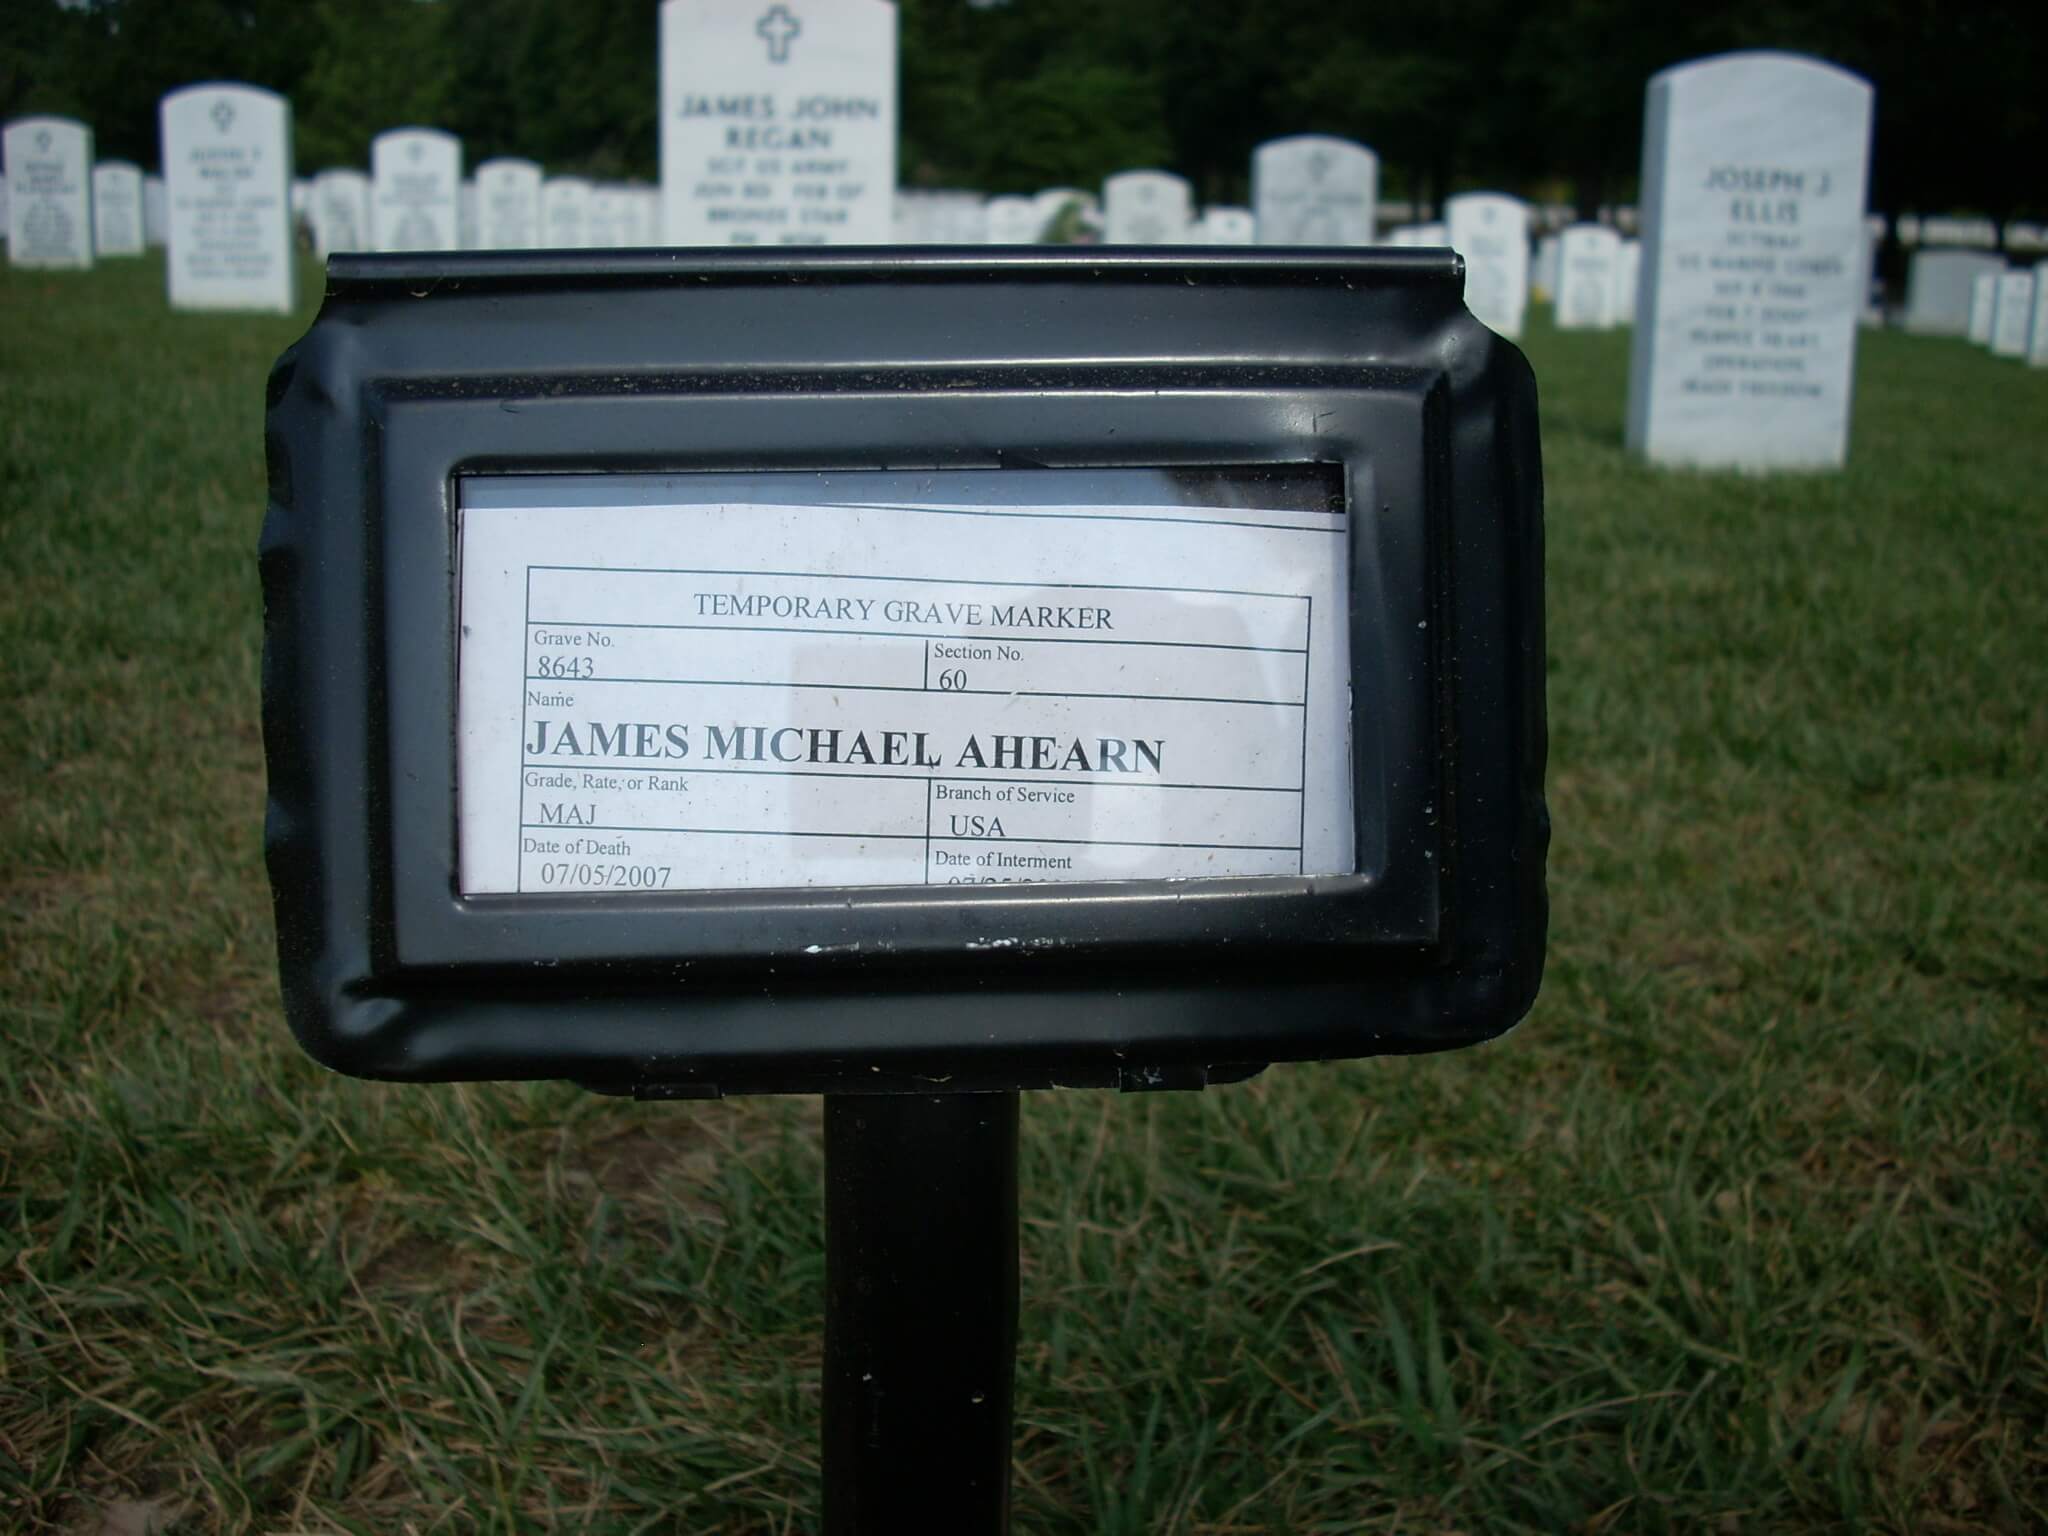 jmahearn-gravesite-photo-july-2007-001